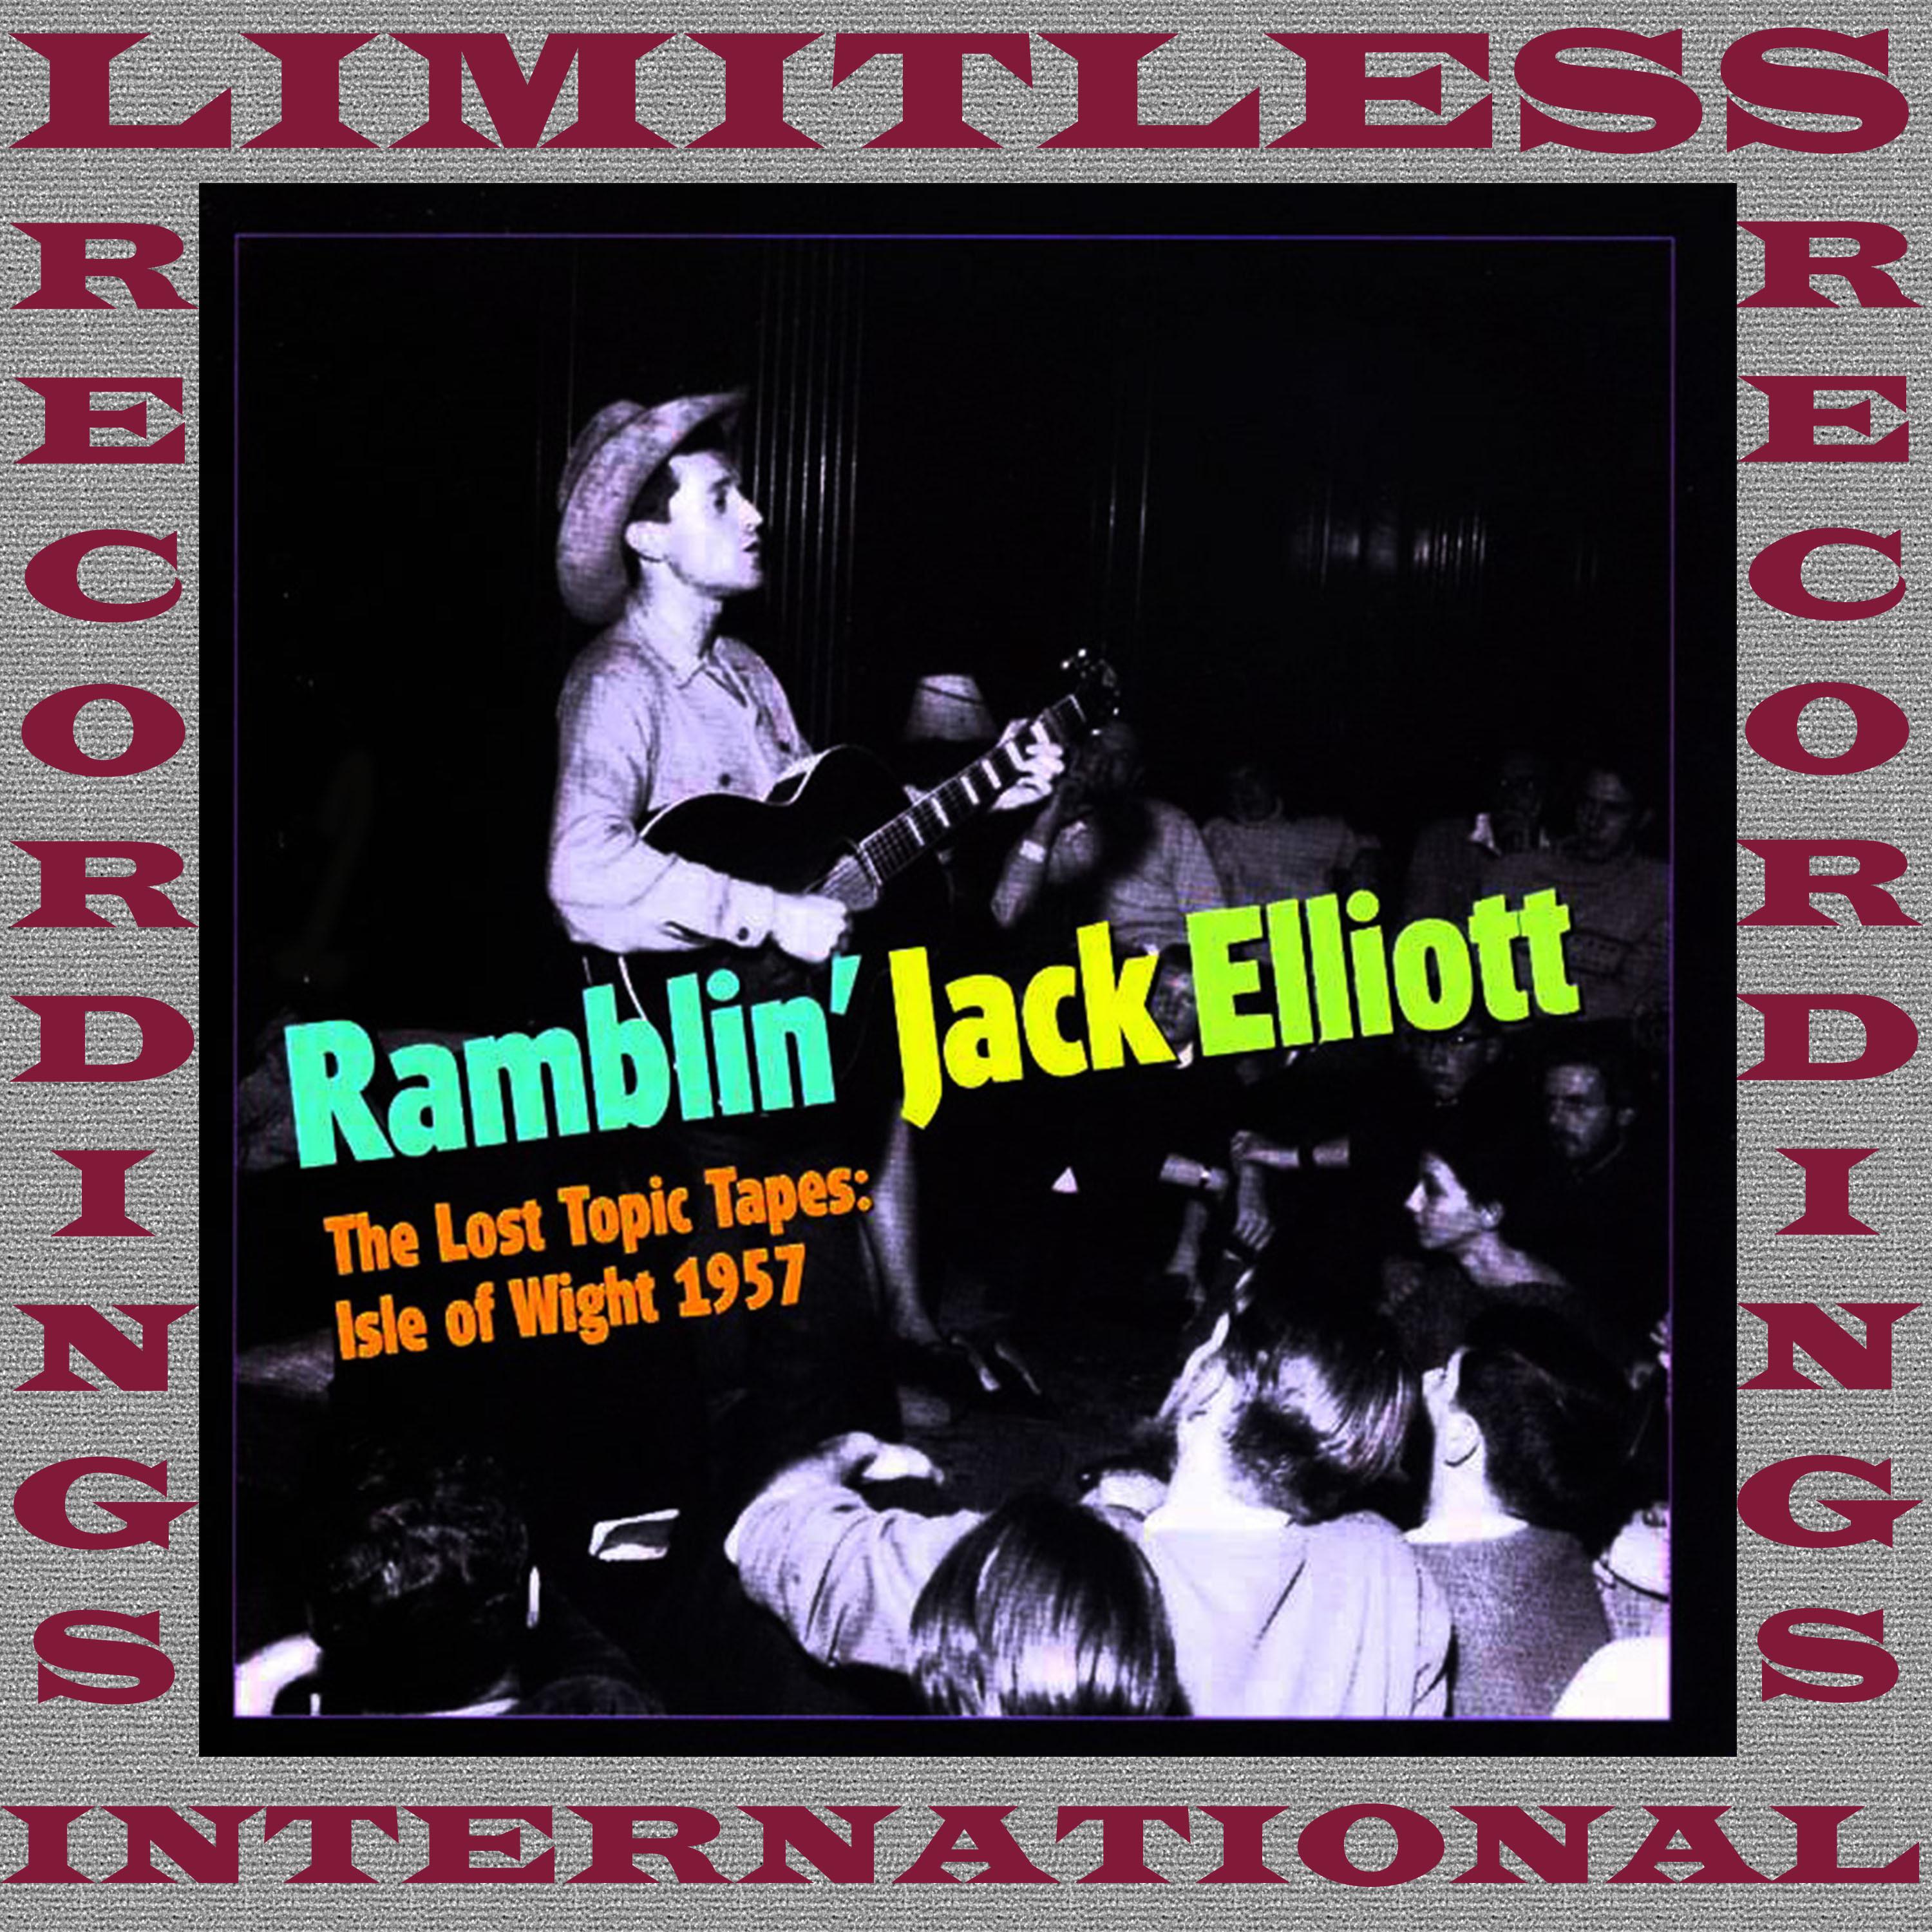 Ramblin Jack Elliott